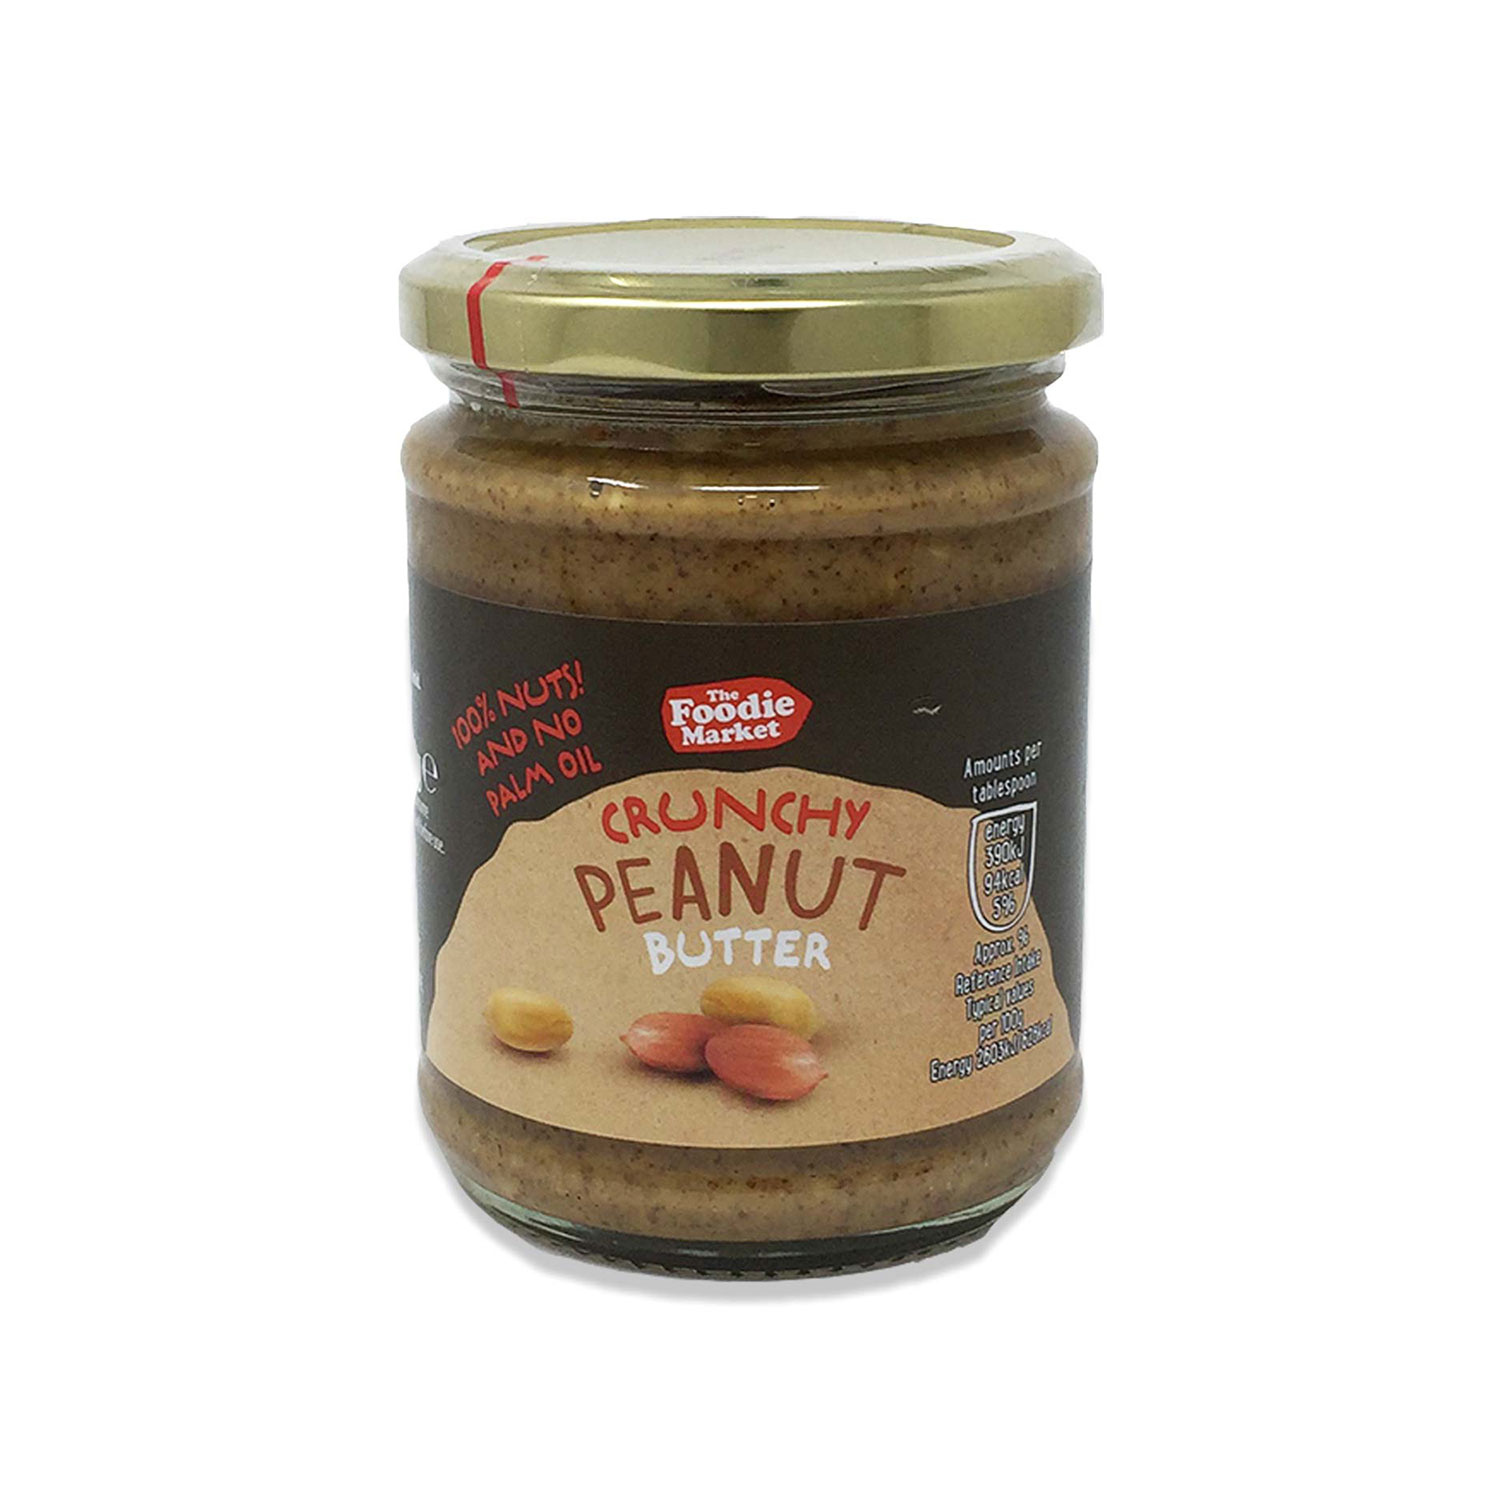 Crunchy Peanut Butter Aldi Uk